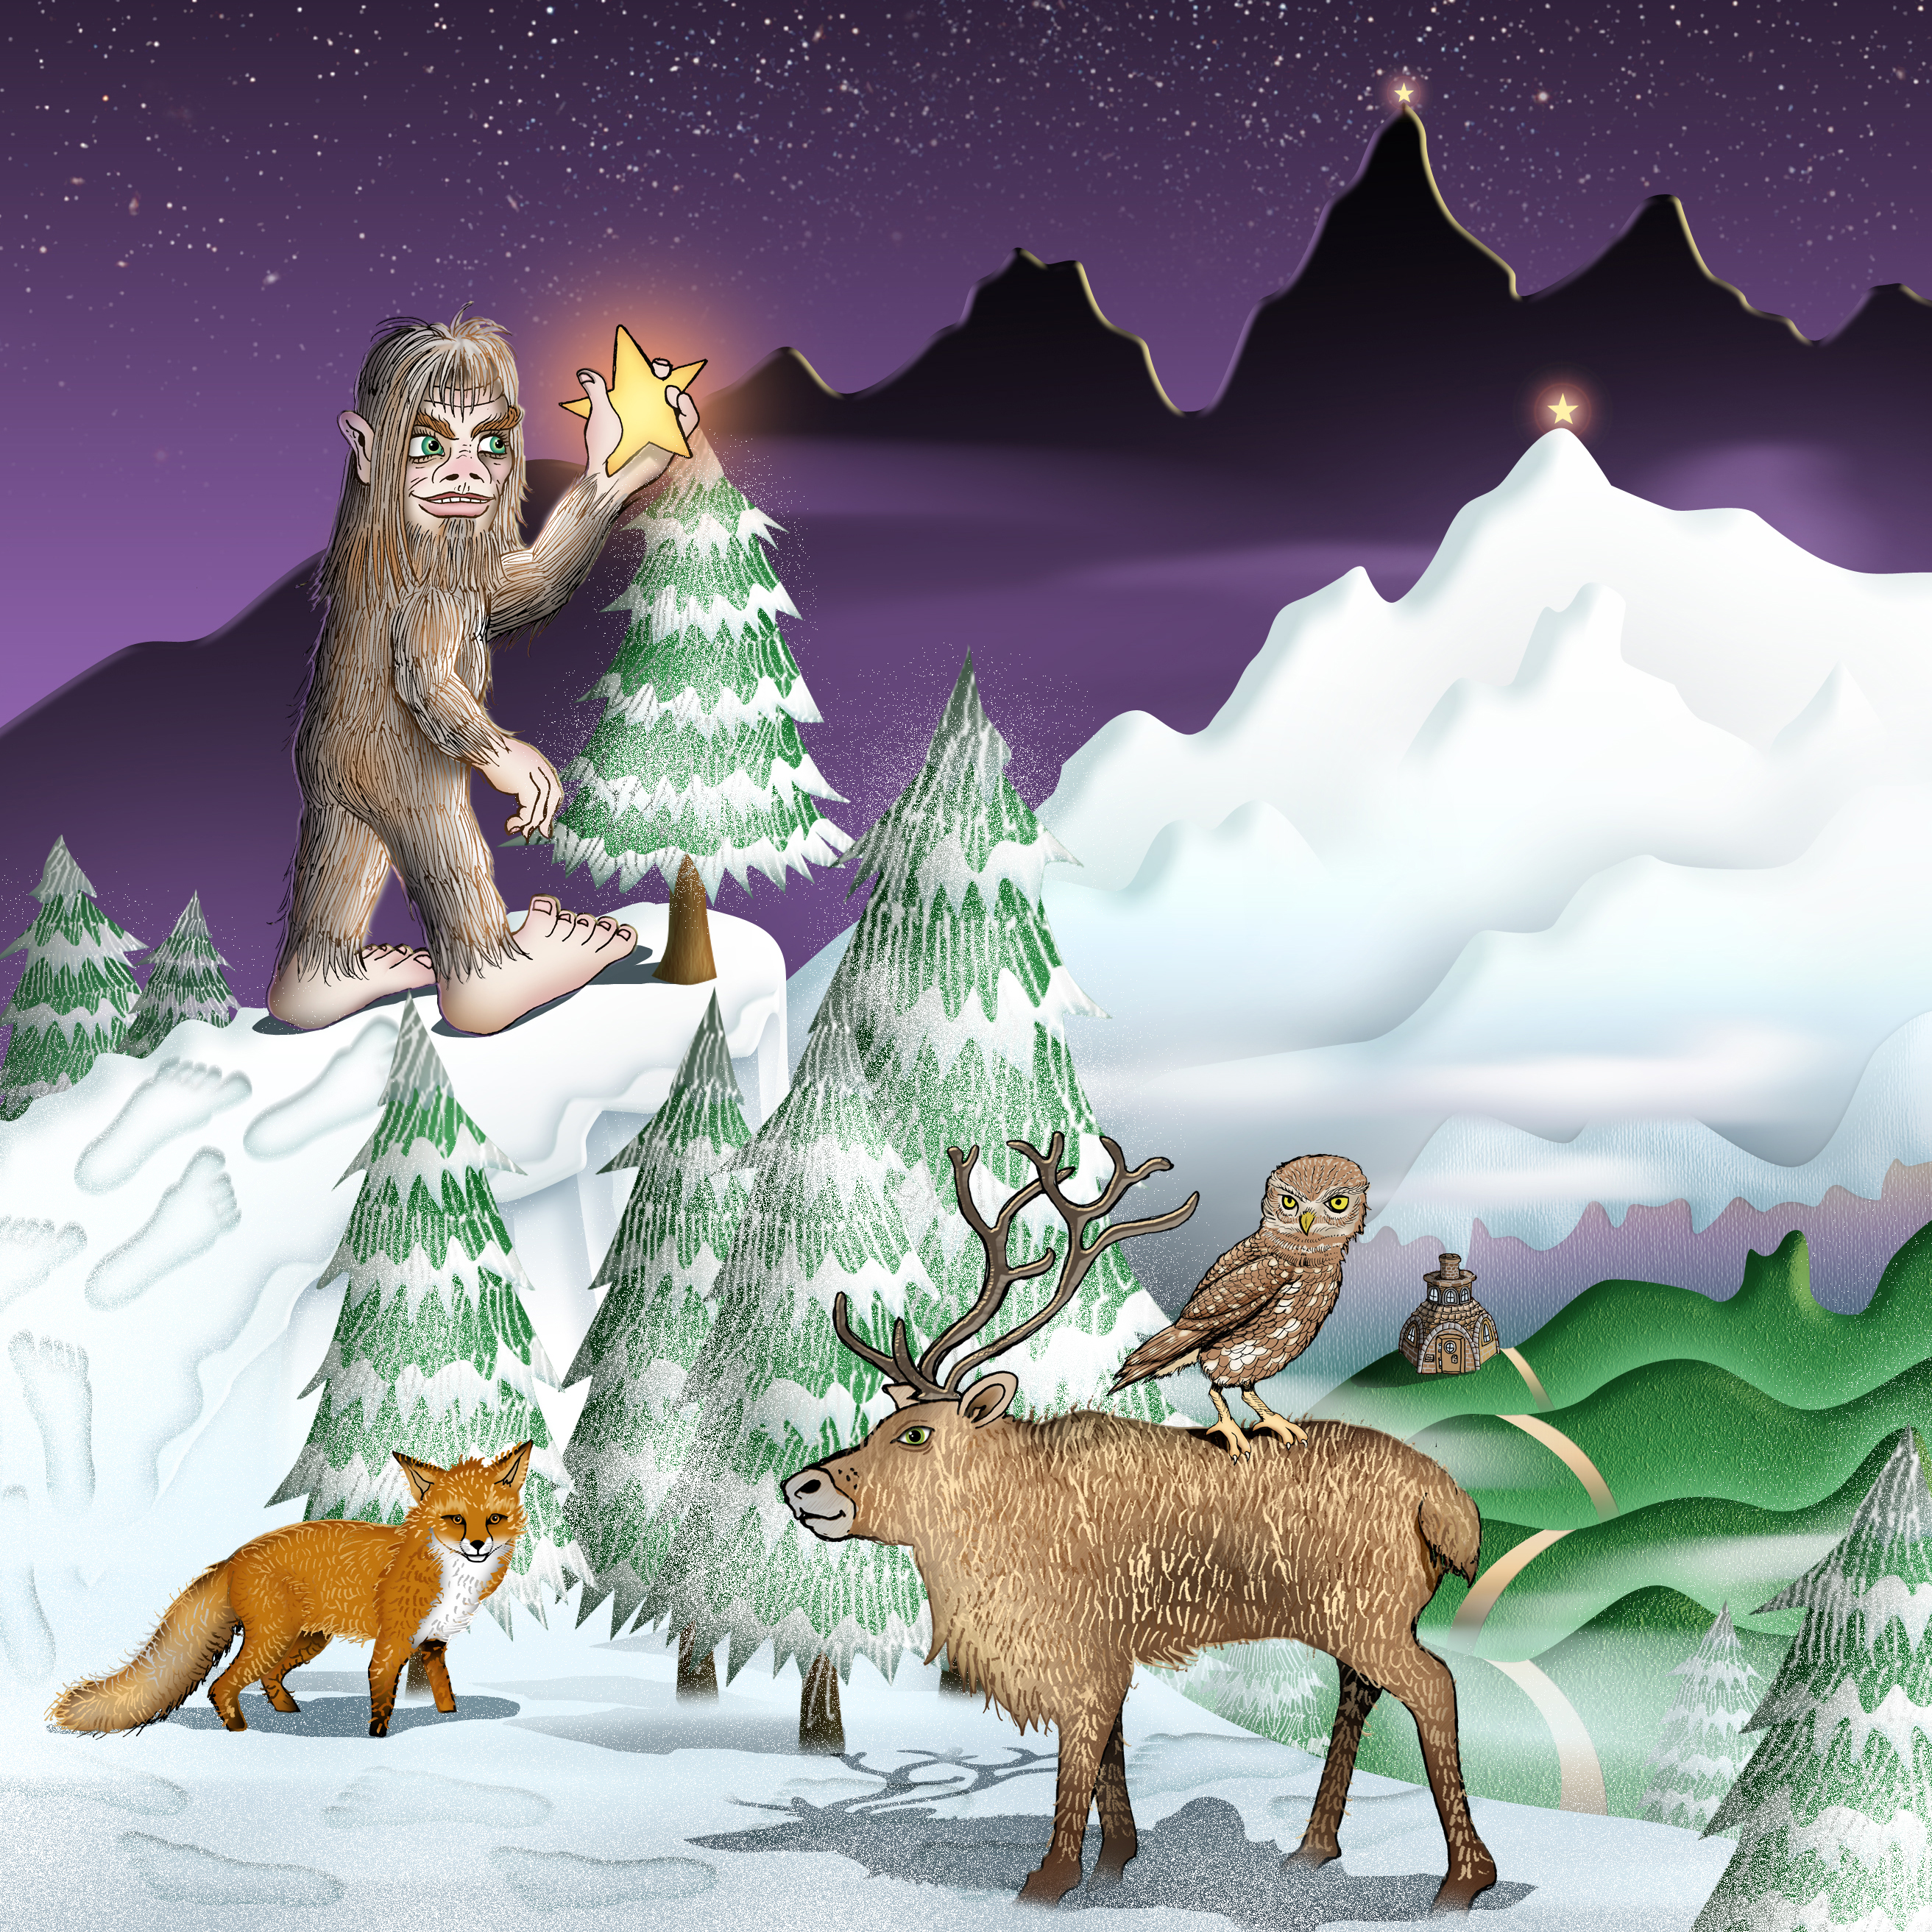 Children’s Illustration – “Winter Star Mountain Journey”